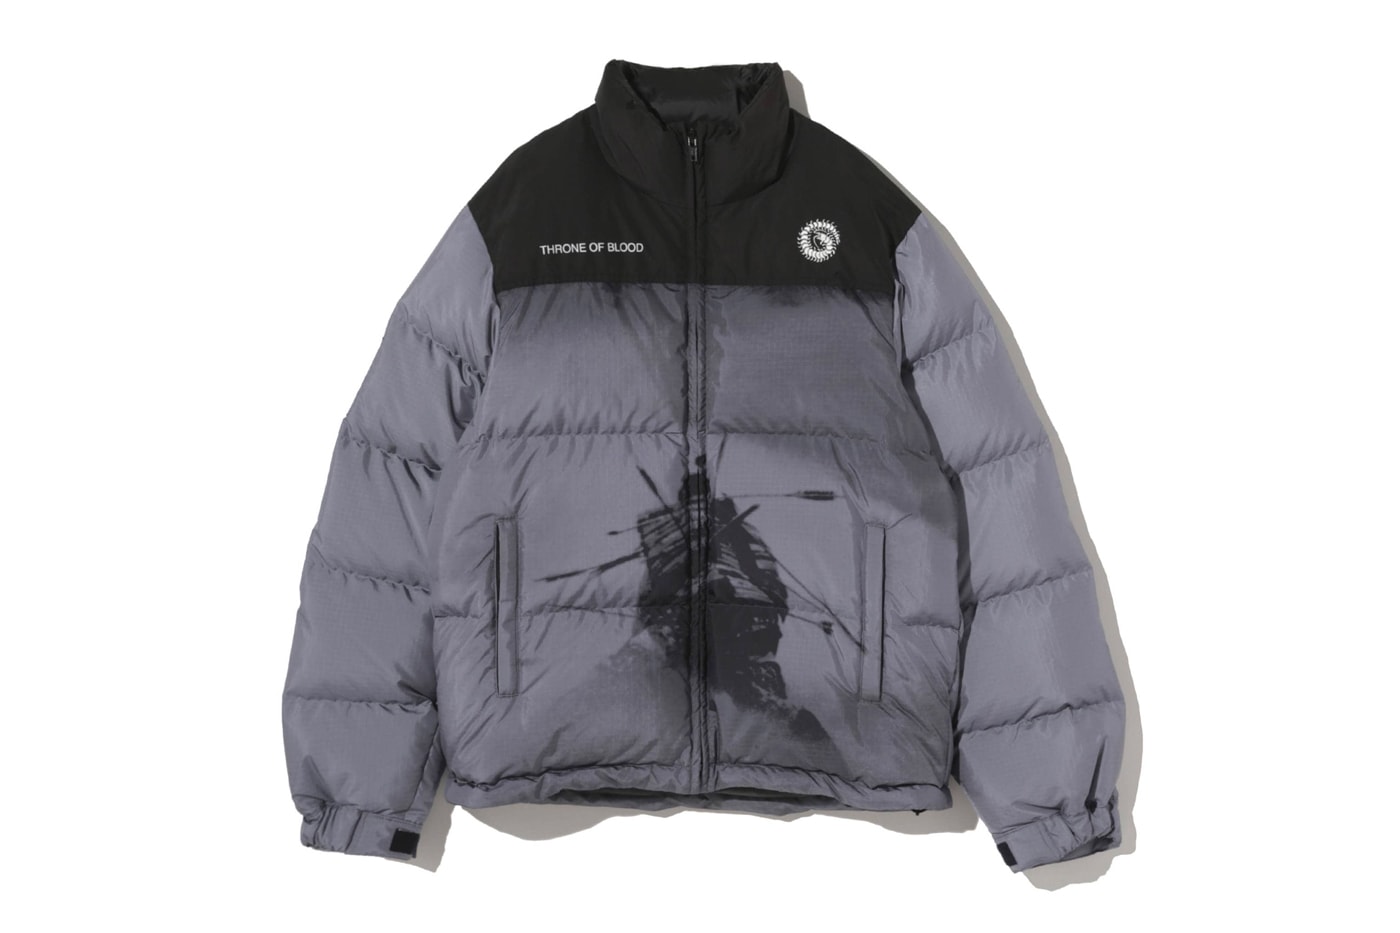 UNDERCOVER Akira Kurosawa Fall Winter 2020 Puffer Jackets menswear streetwear outerwear fw20